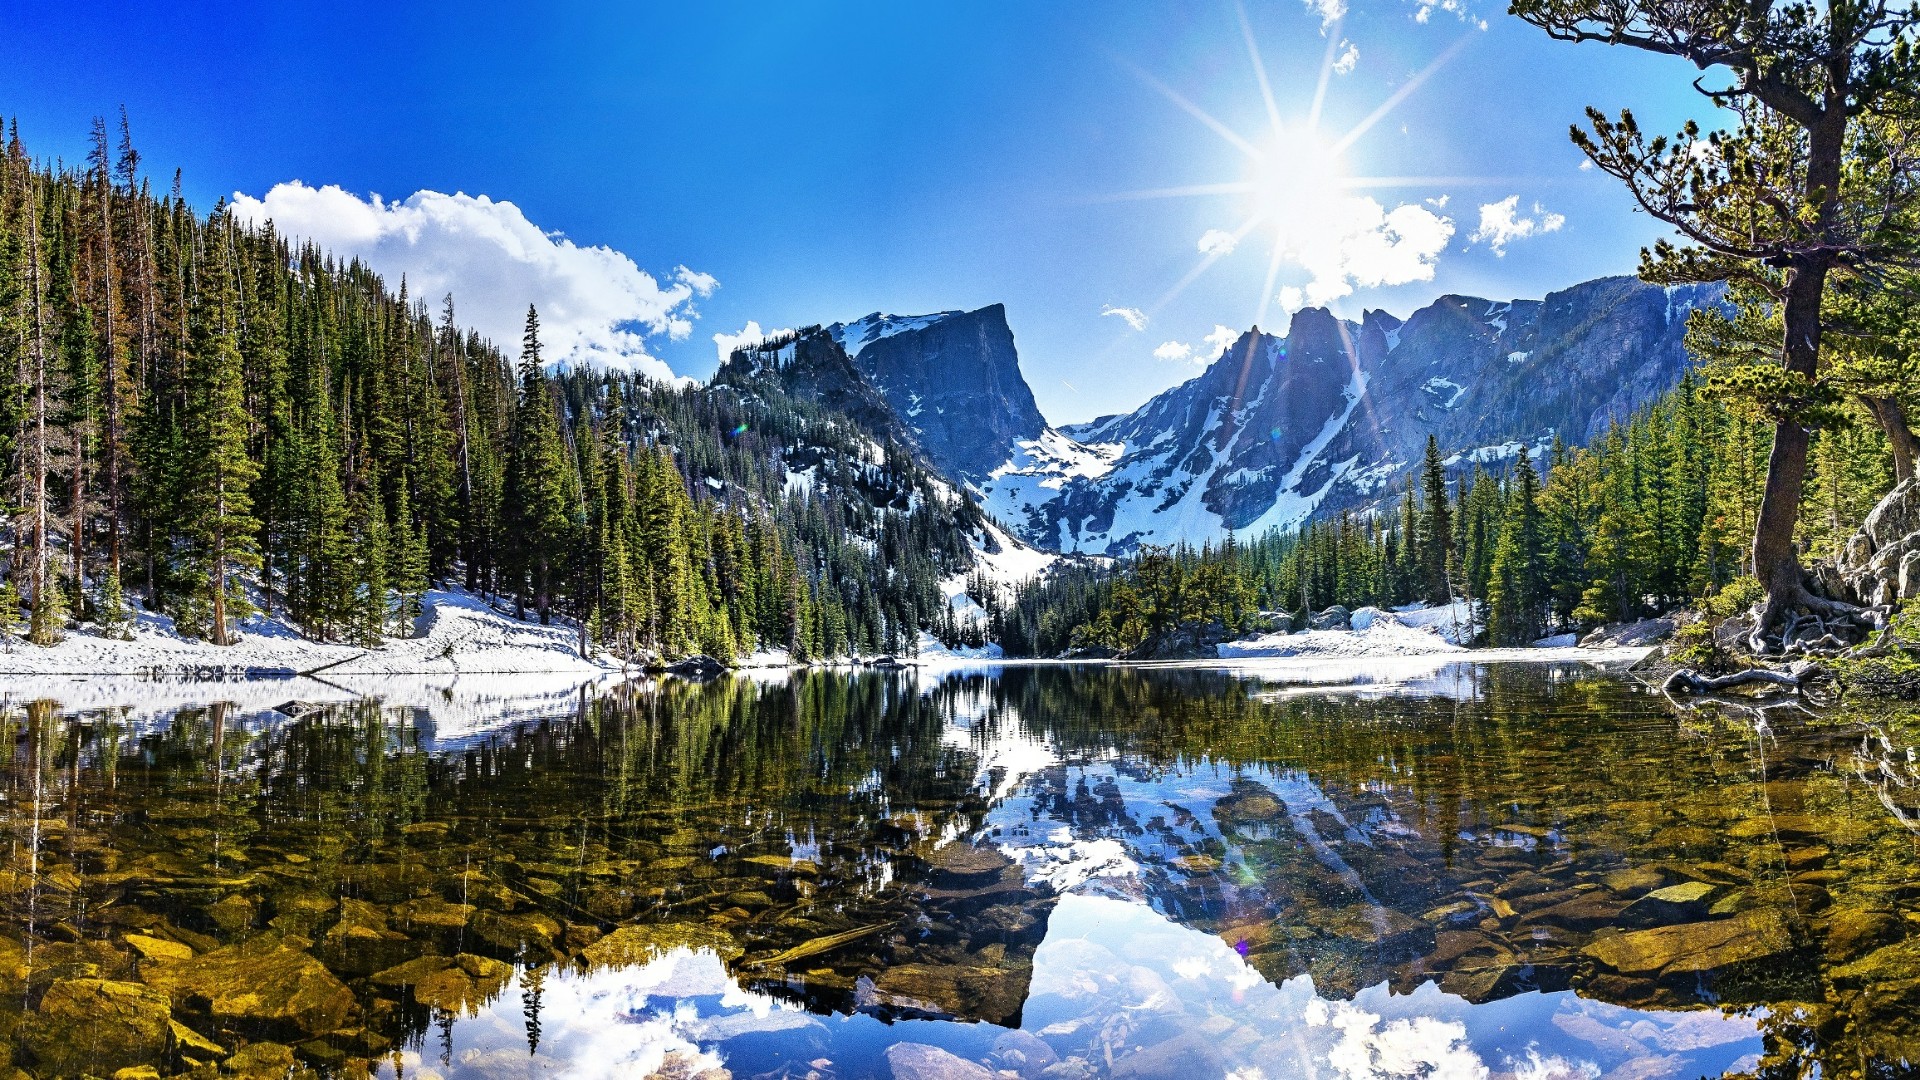 Dream Lake with Hallett Peak - backiee